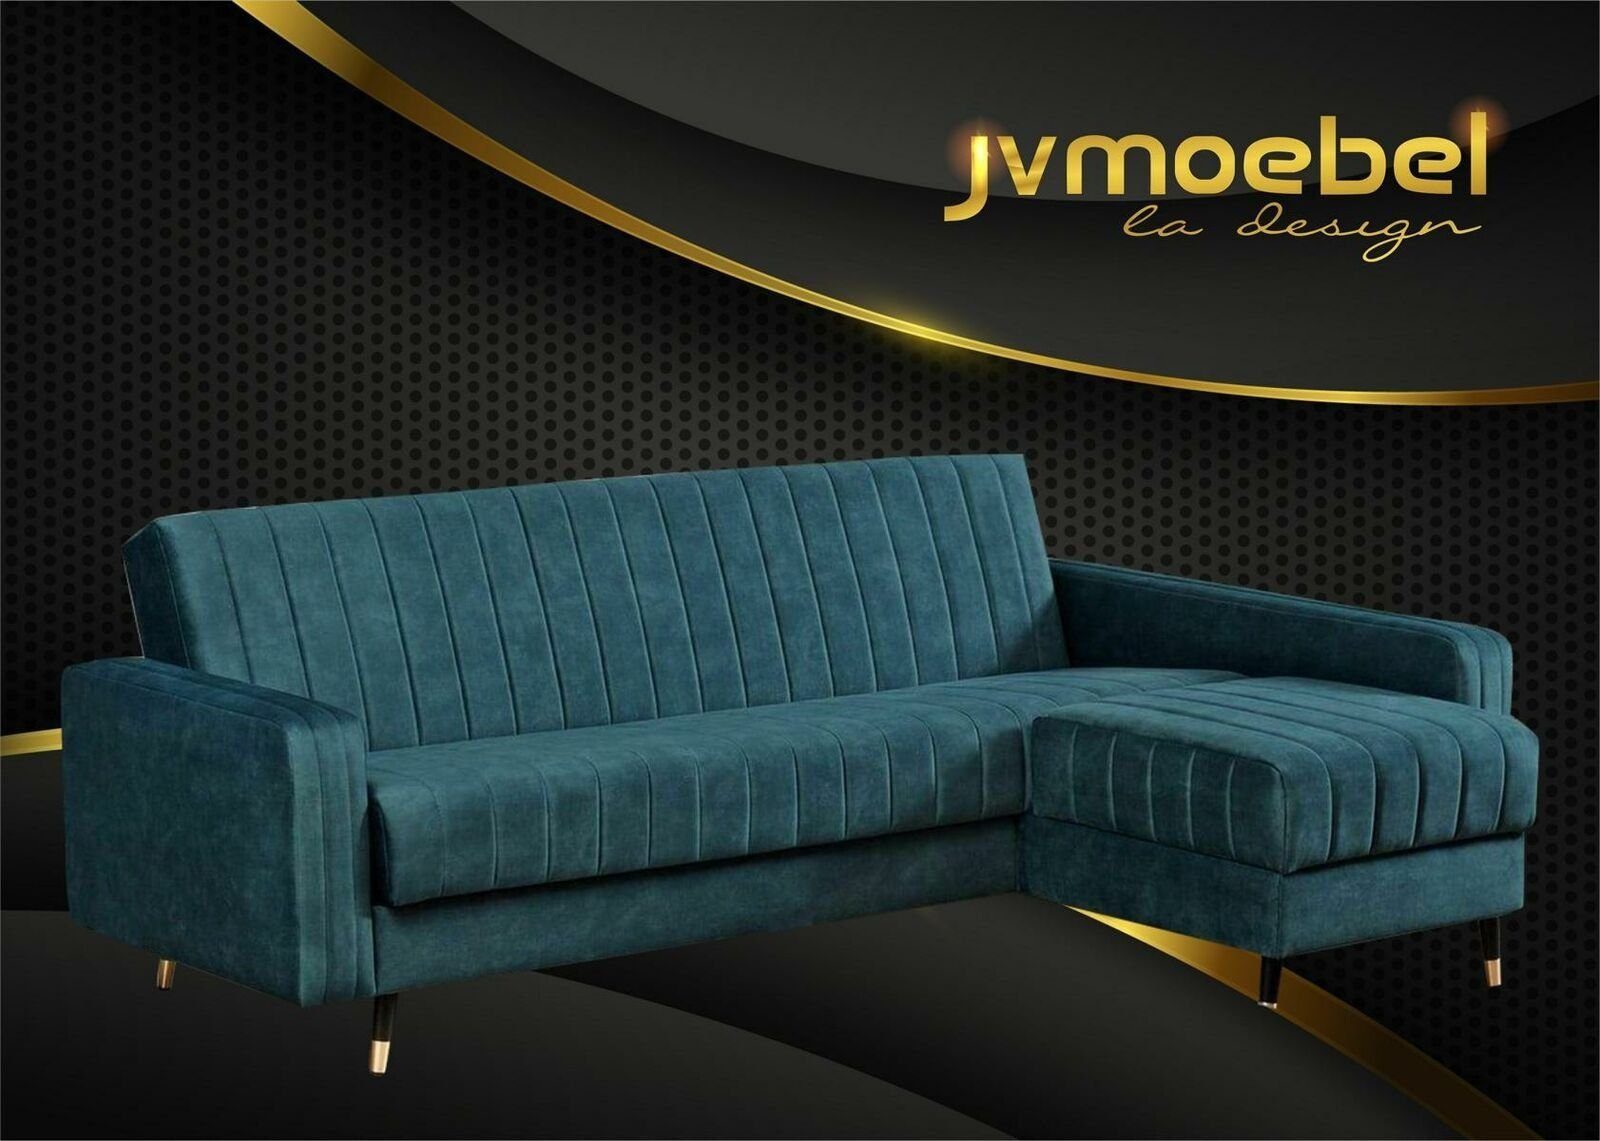 JVmoebel Ecksofa, Design Luxus Garnitur Polster Eckcouch Sofa Blau Couchen Eck